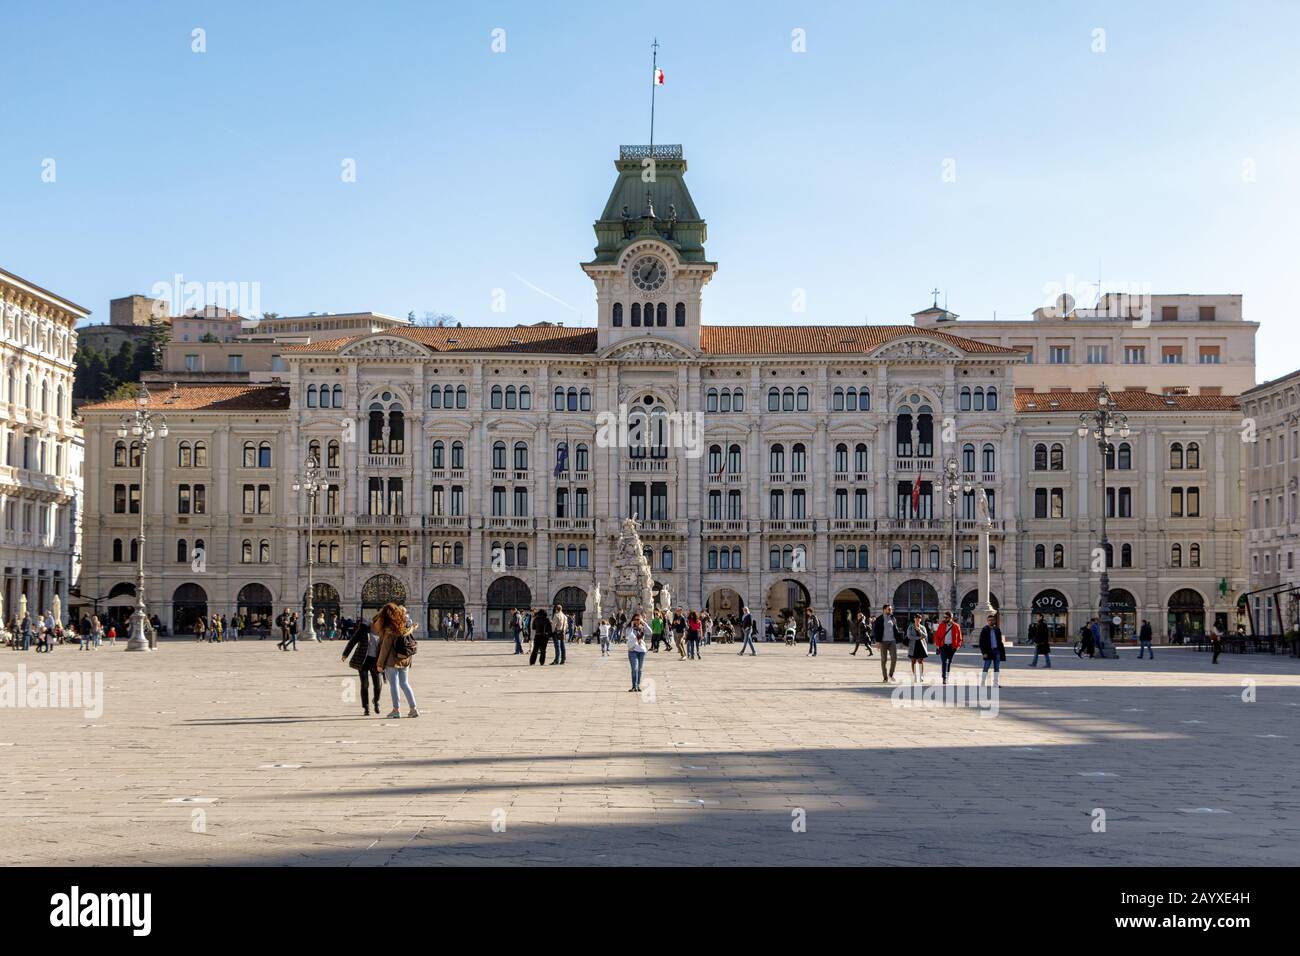 The Trieste City Hall on Piazza Unita d'Italia Stock Photo